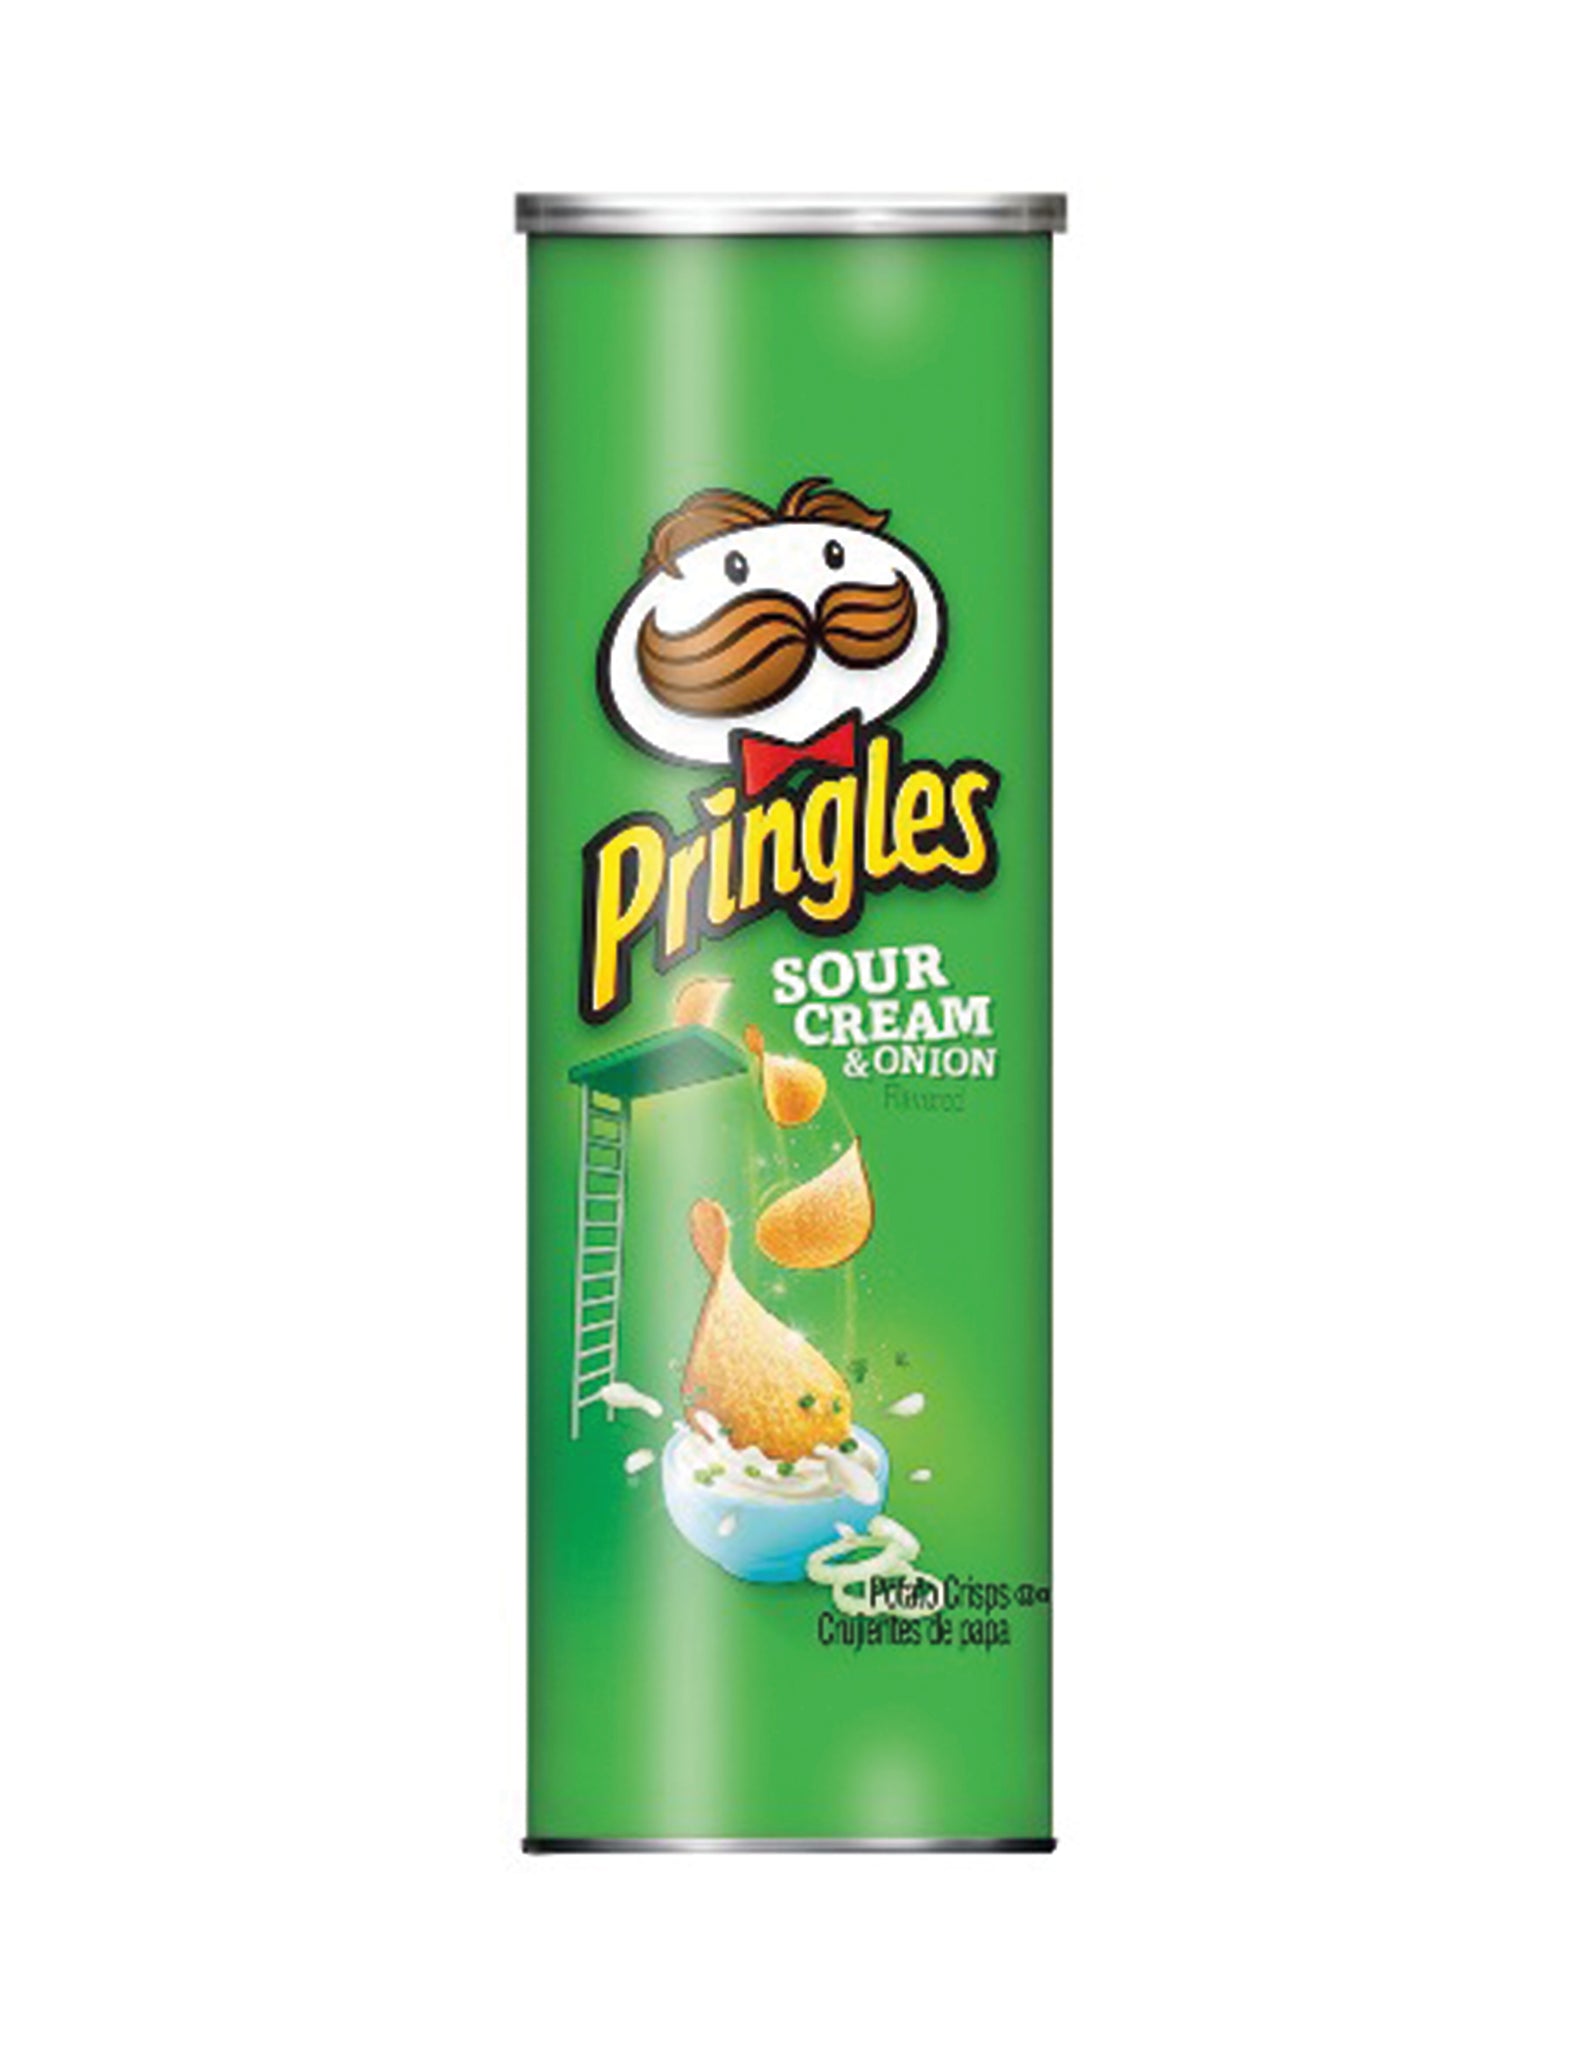 tha>Pringles - Sour cream and onion potato chips can